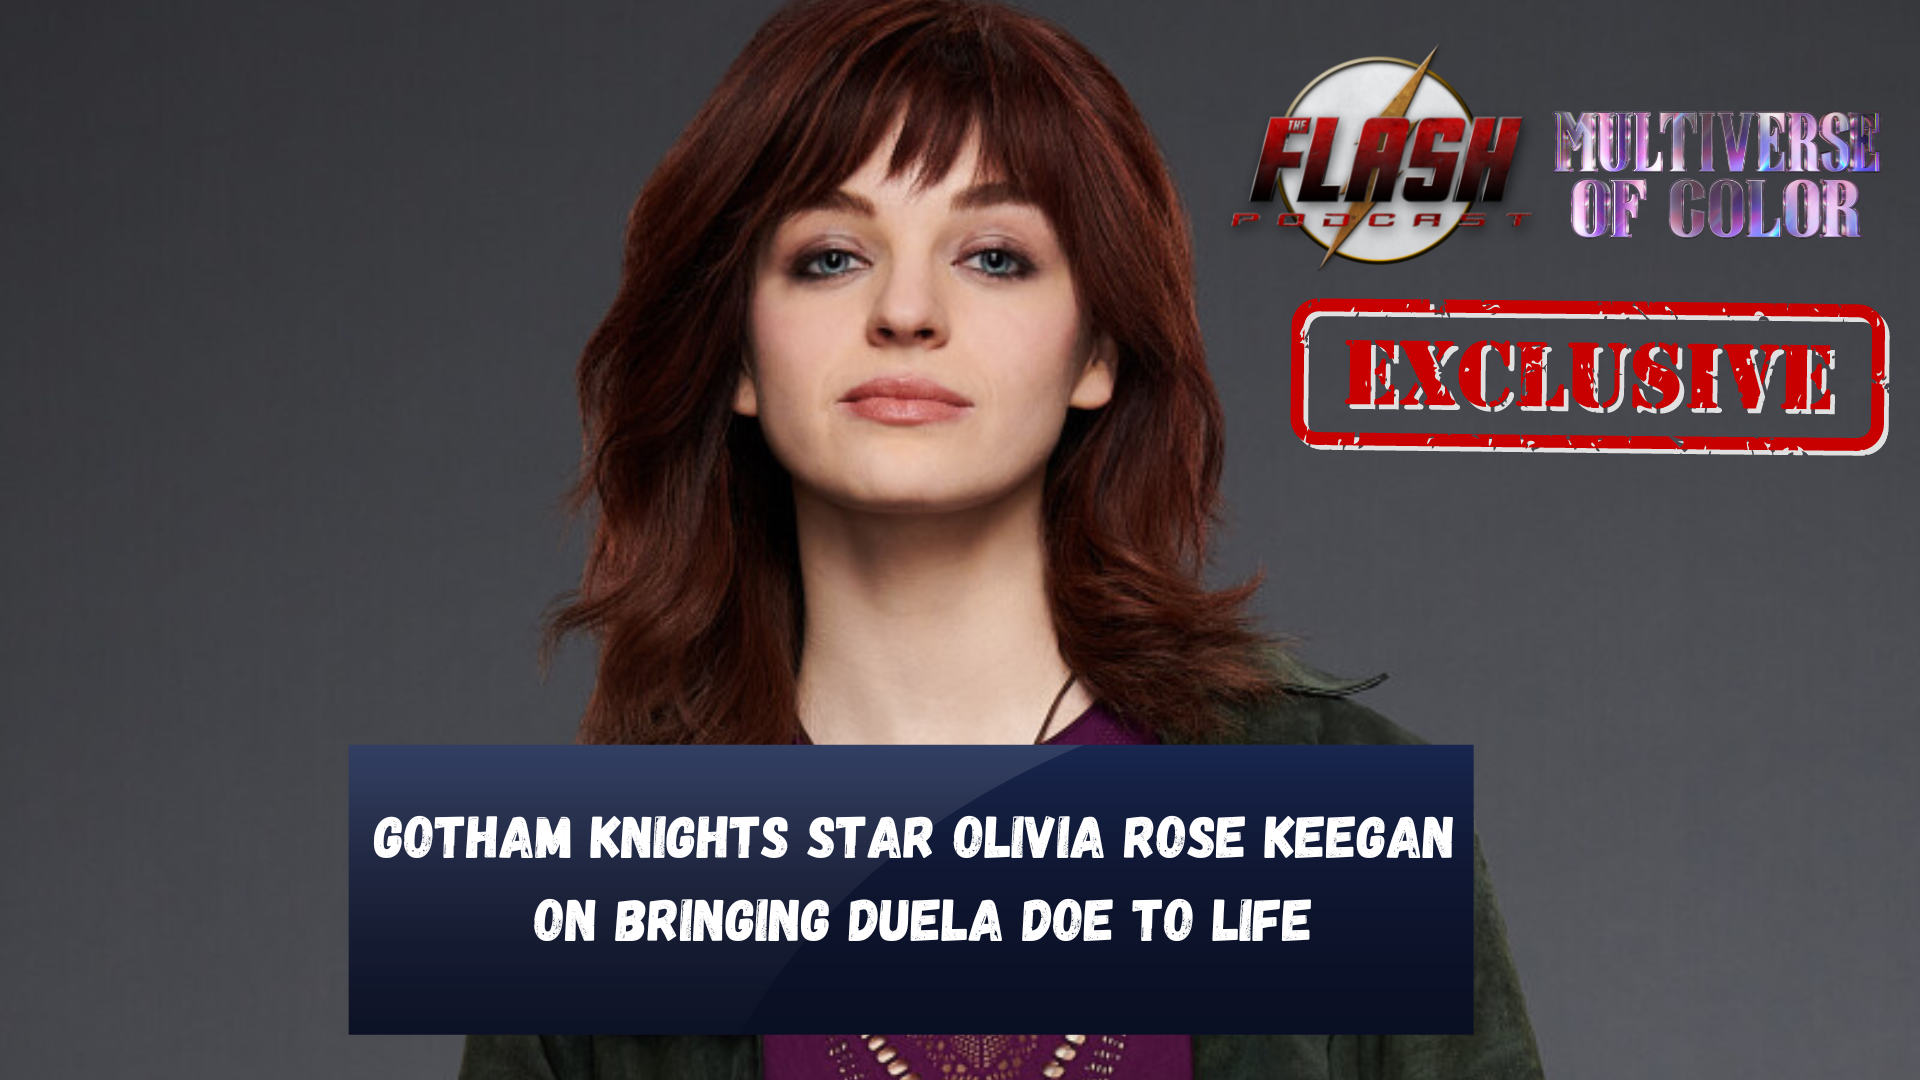 Gotham Knights Season 2 Trailer (HD) - DC, Olivia Rose Keegan, Oscar  Morgan, Renewed, Release Date, 